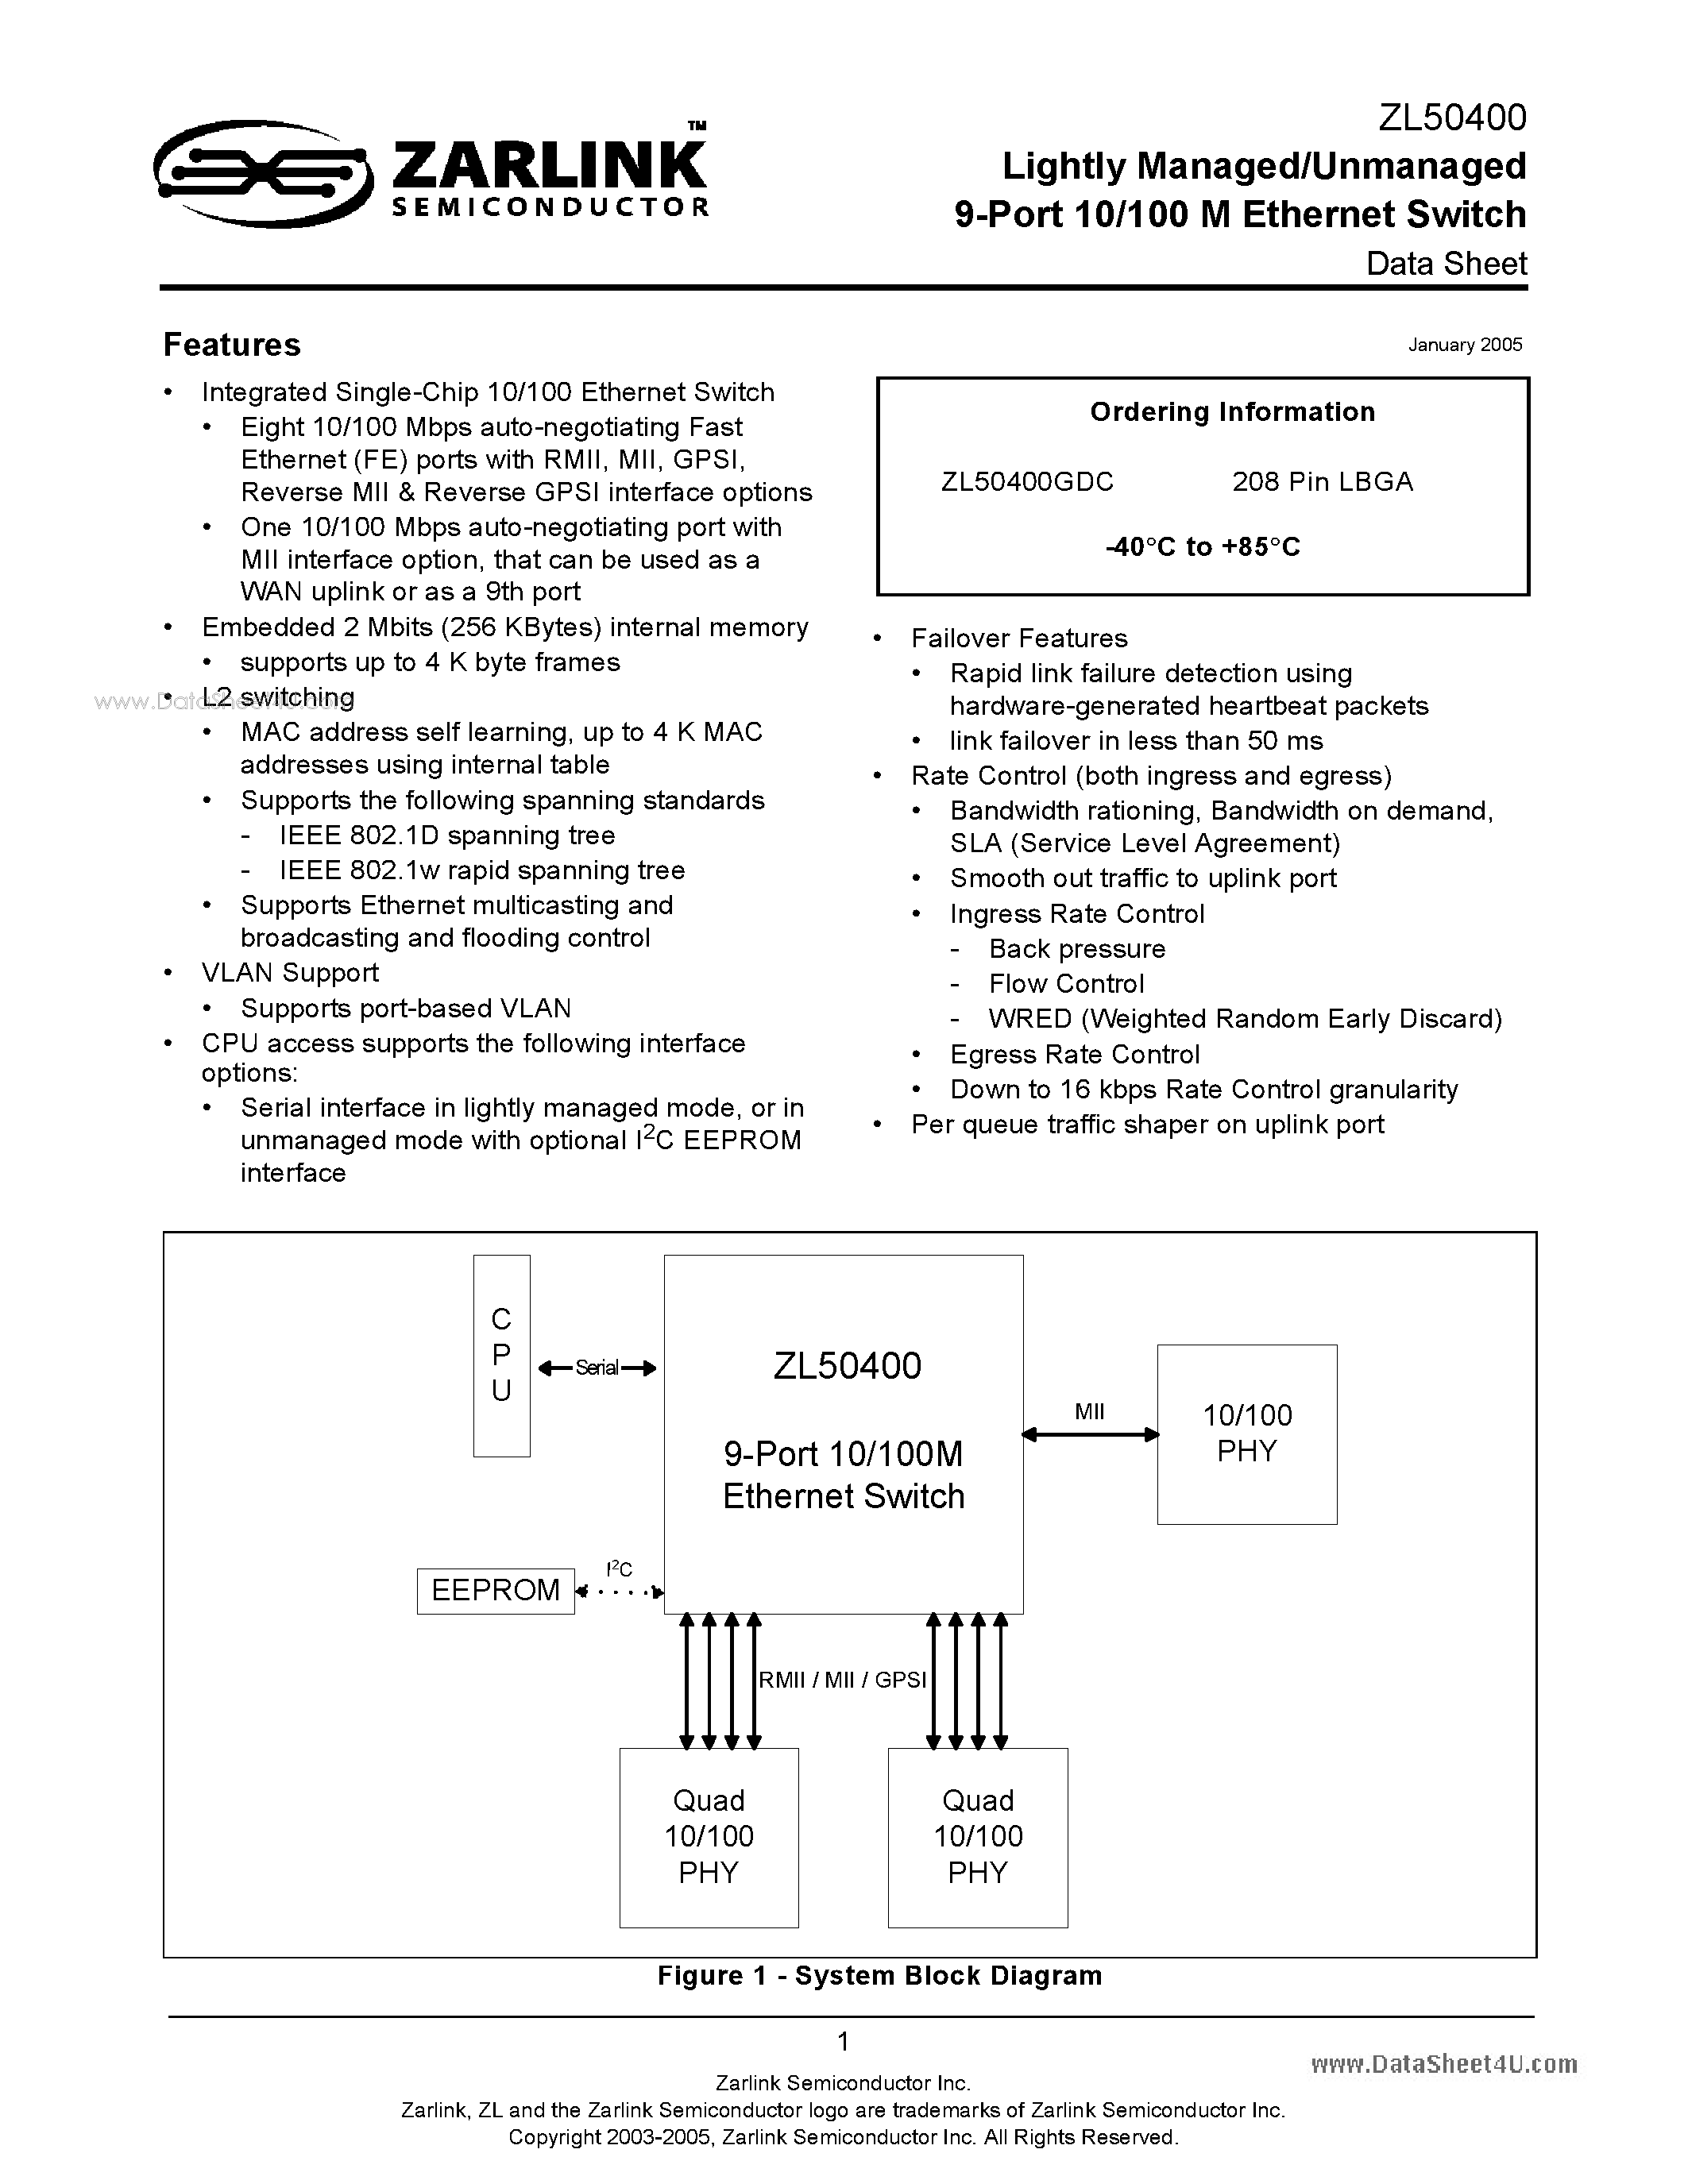 Datasheet ZL50400 - Lightly Managed/Unmanaged 9-Port 10/100 M Ethernet Switch page 1